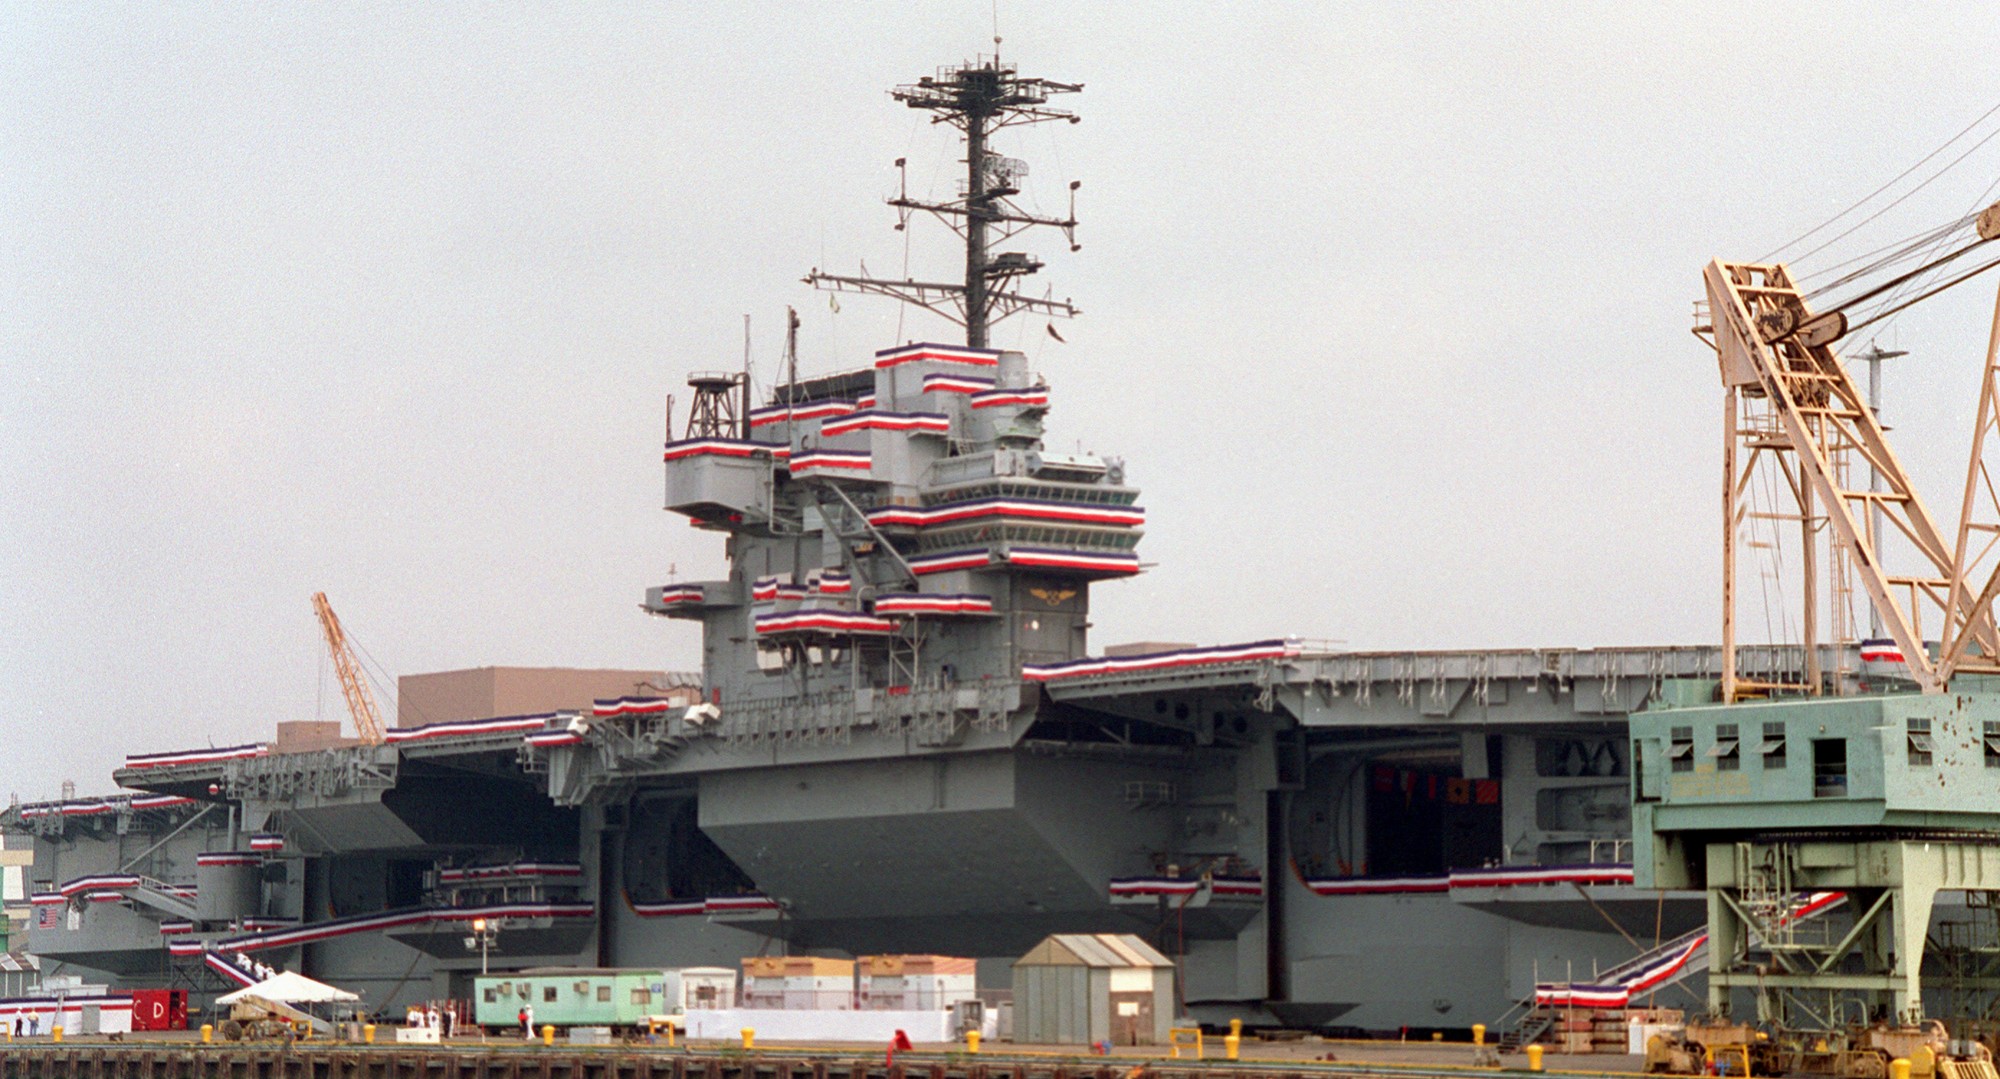 cv-59 uss forrestal aircraft carrier us navy decommissioning philadelphia naval shipyard 111